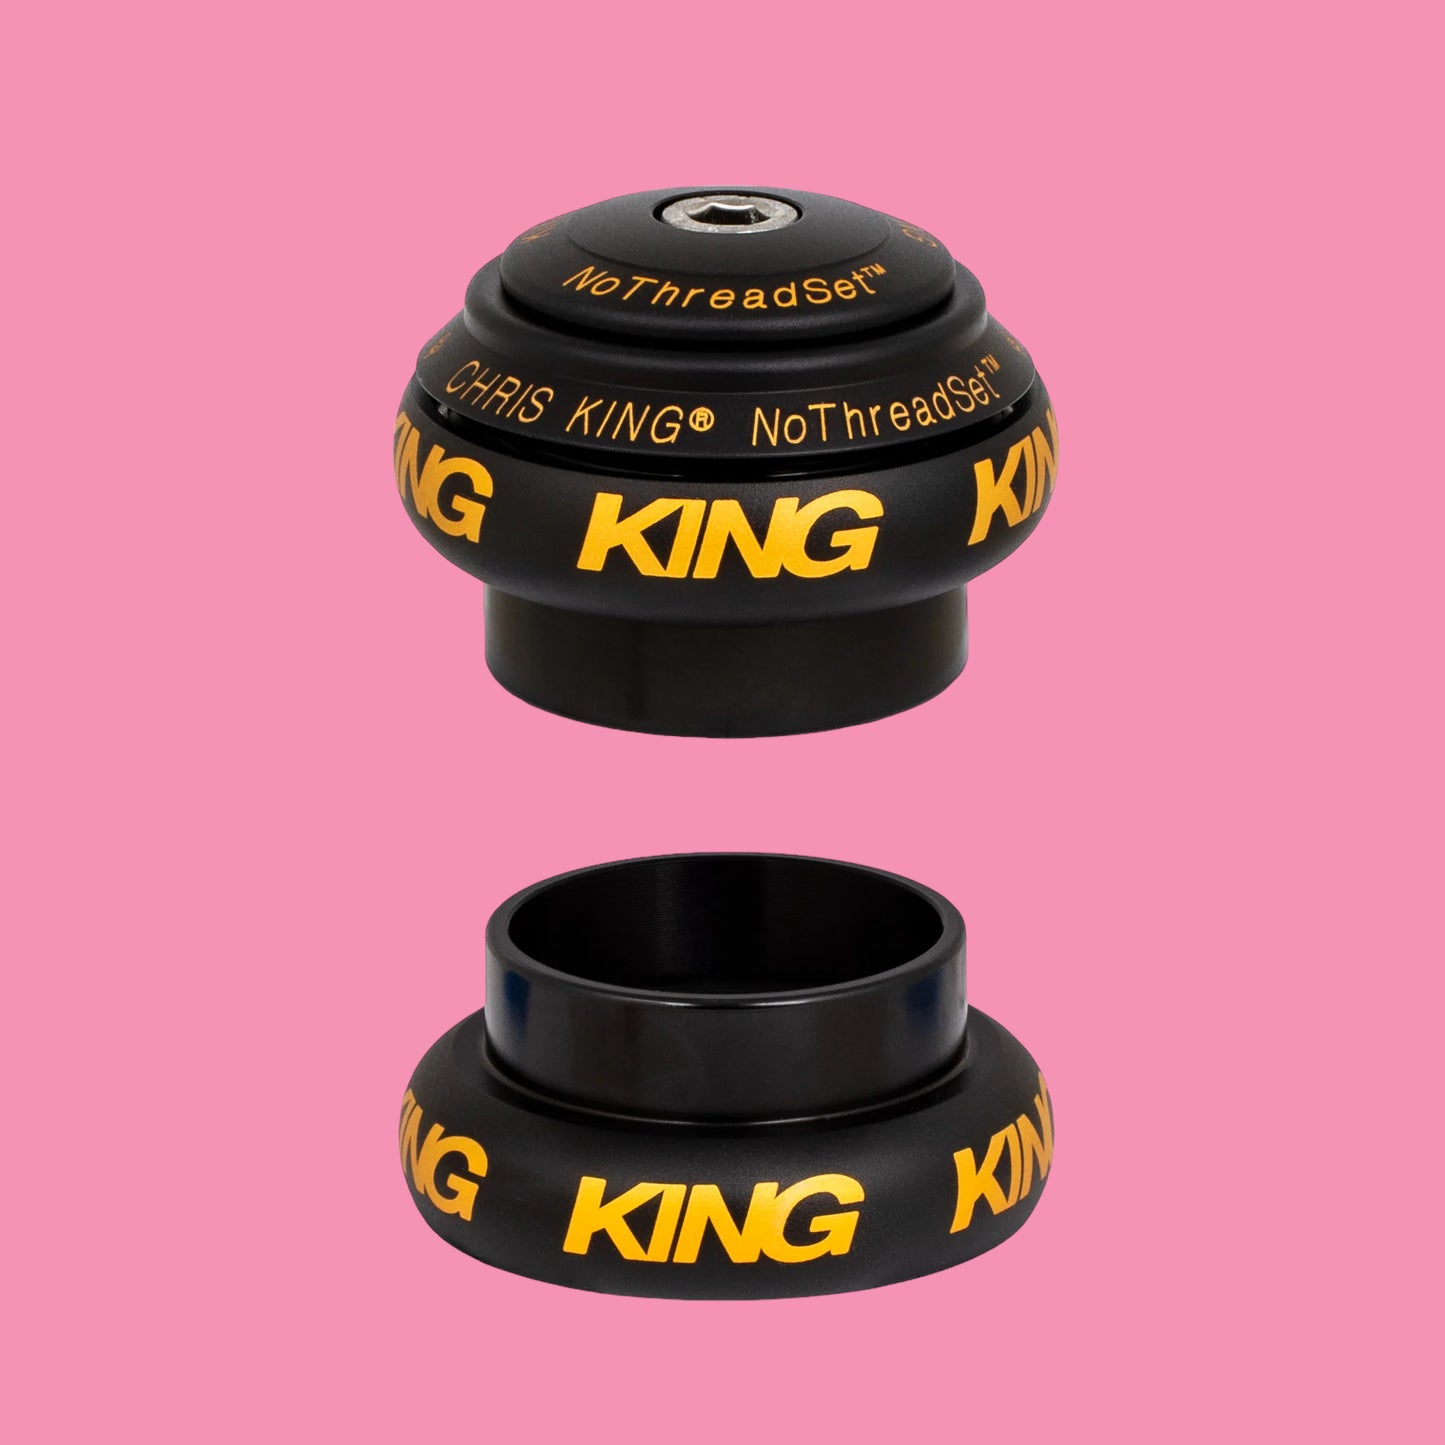 King 1,1/8th headset